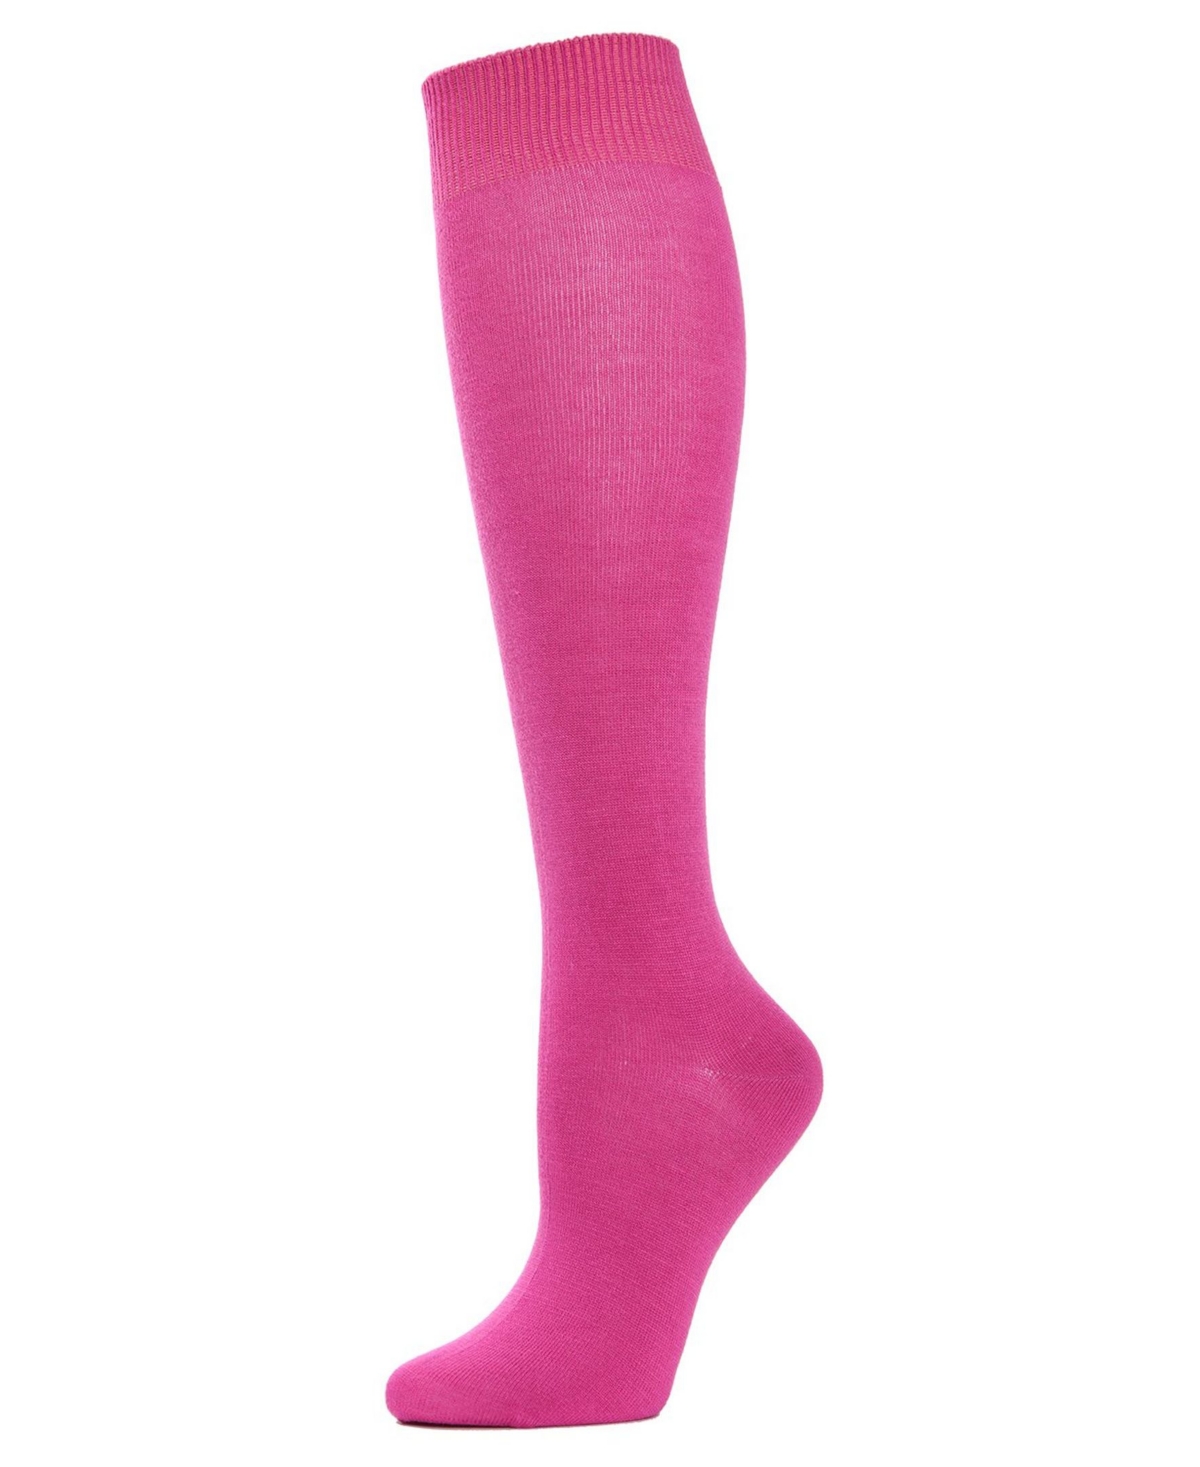 Women's Bamboo Blend Knit Knee High Socks - Fuchsia